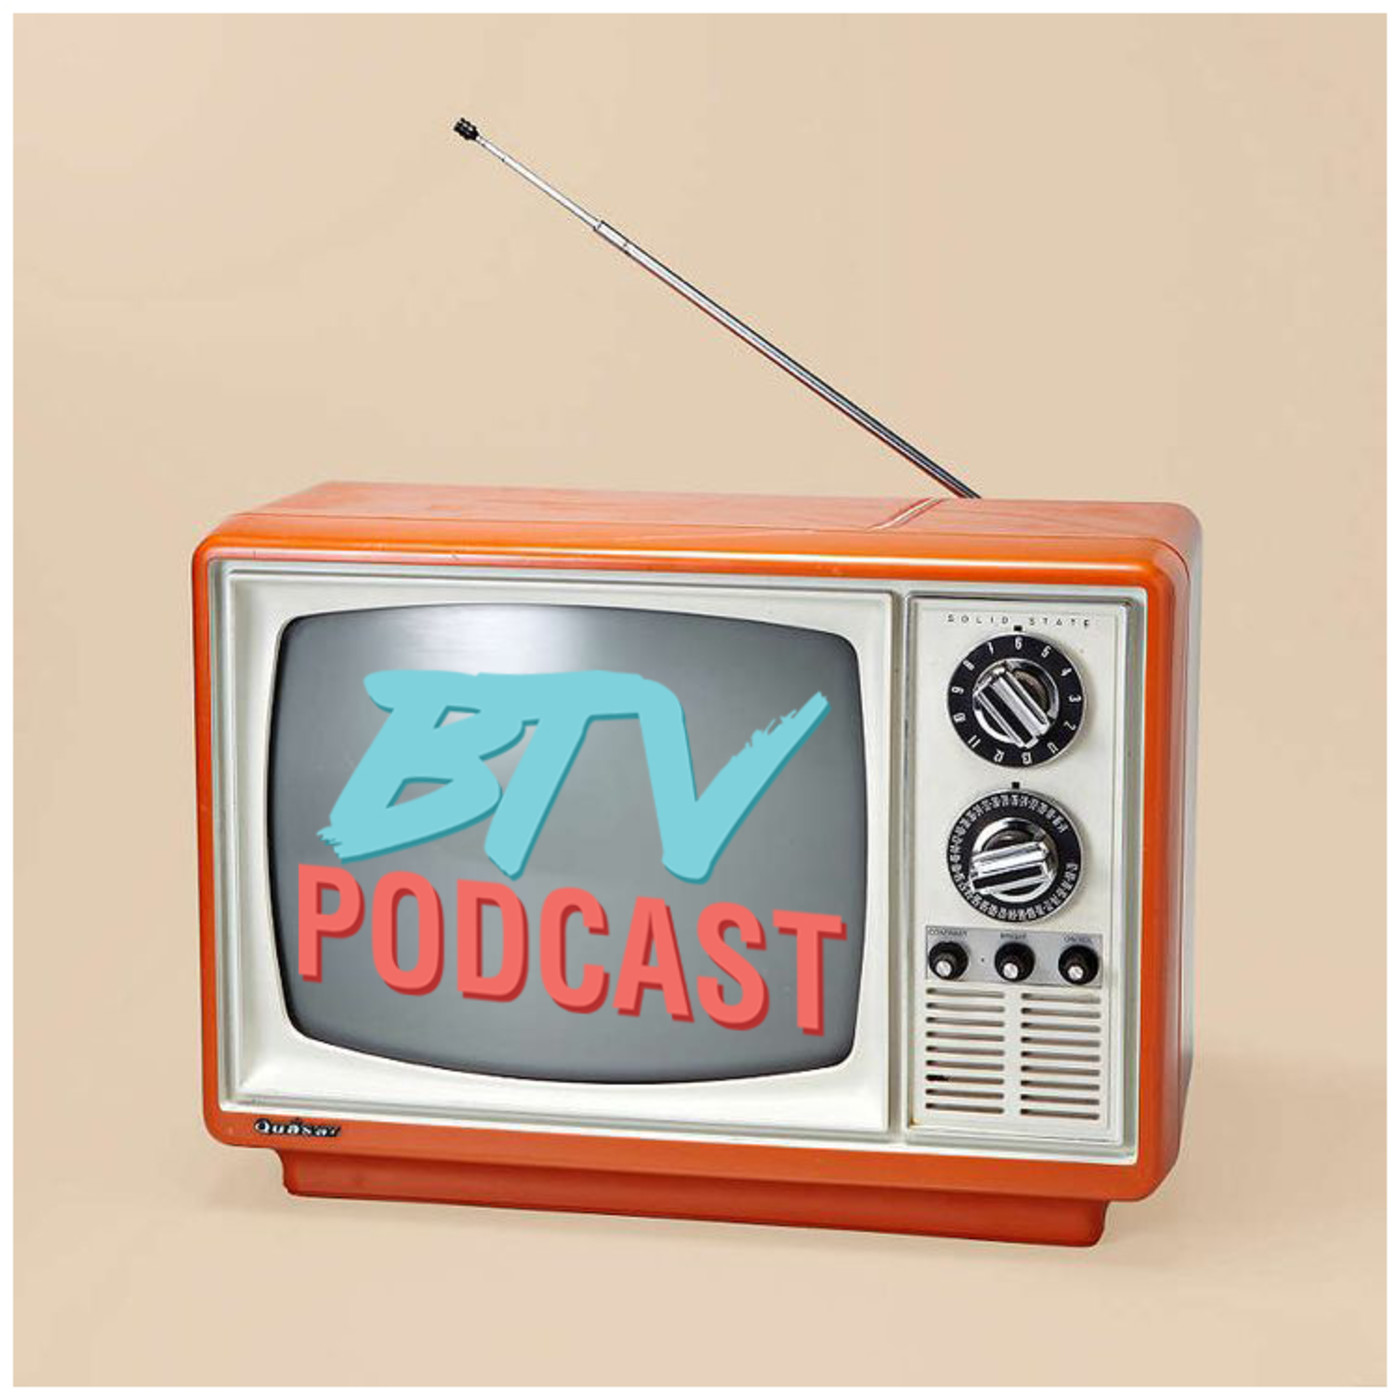 Basura and TV Podcast